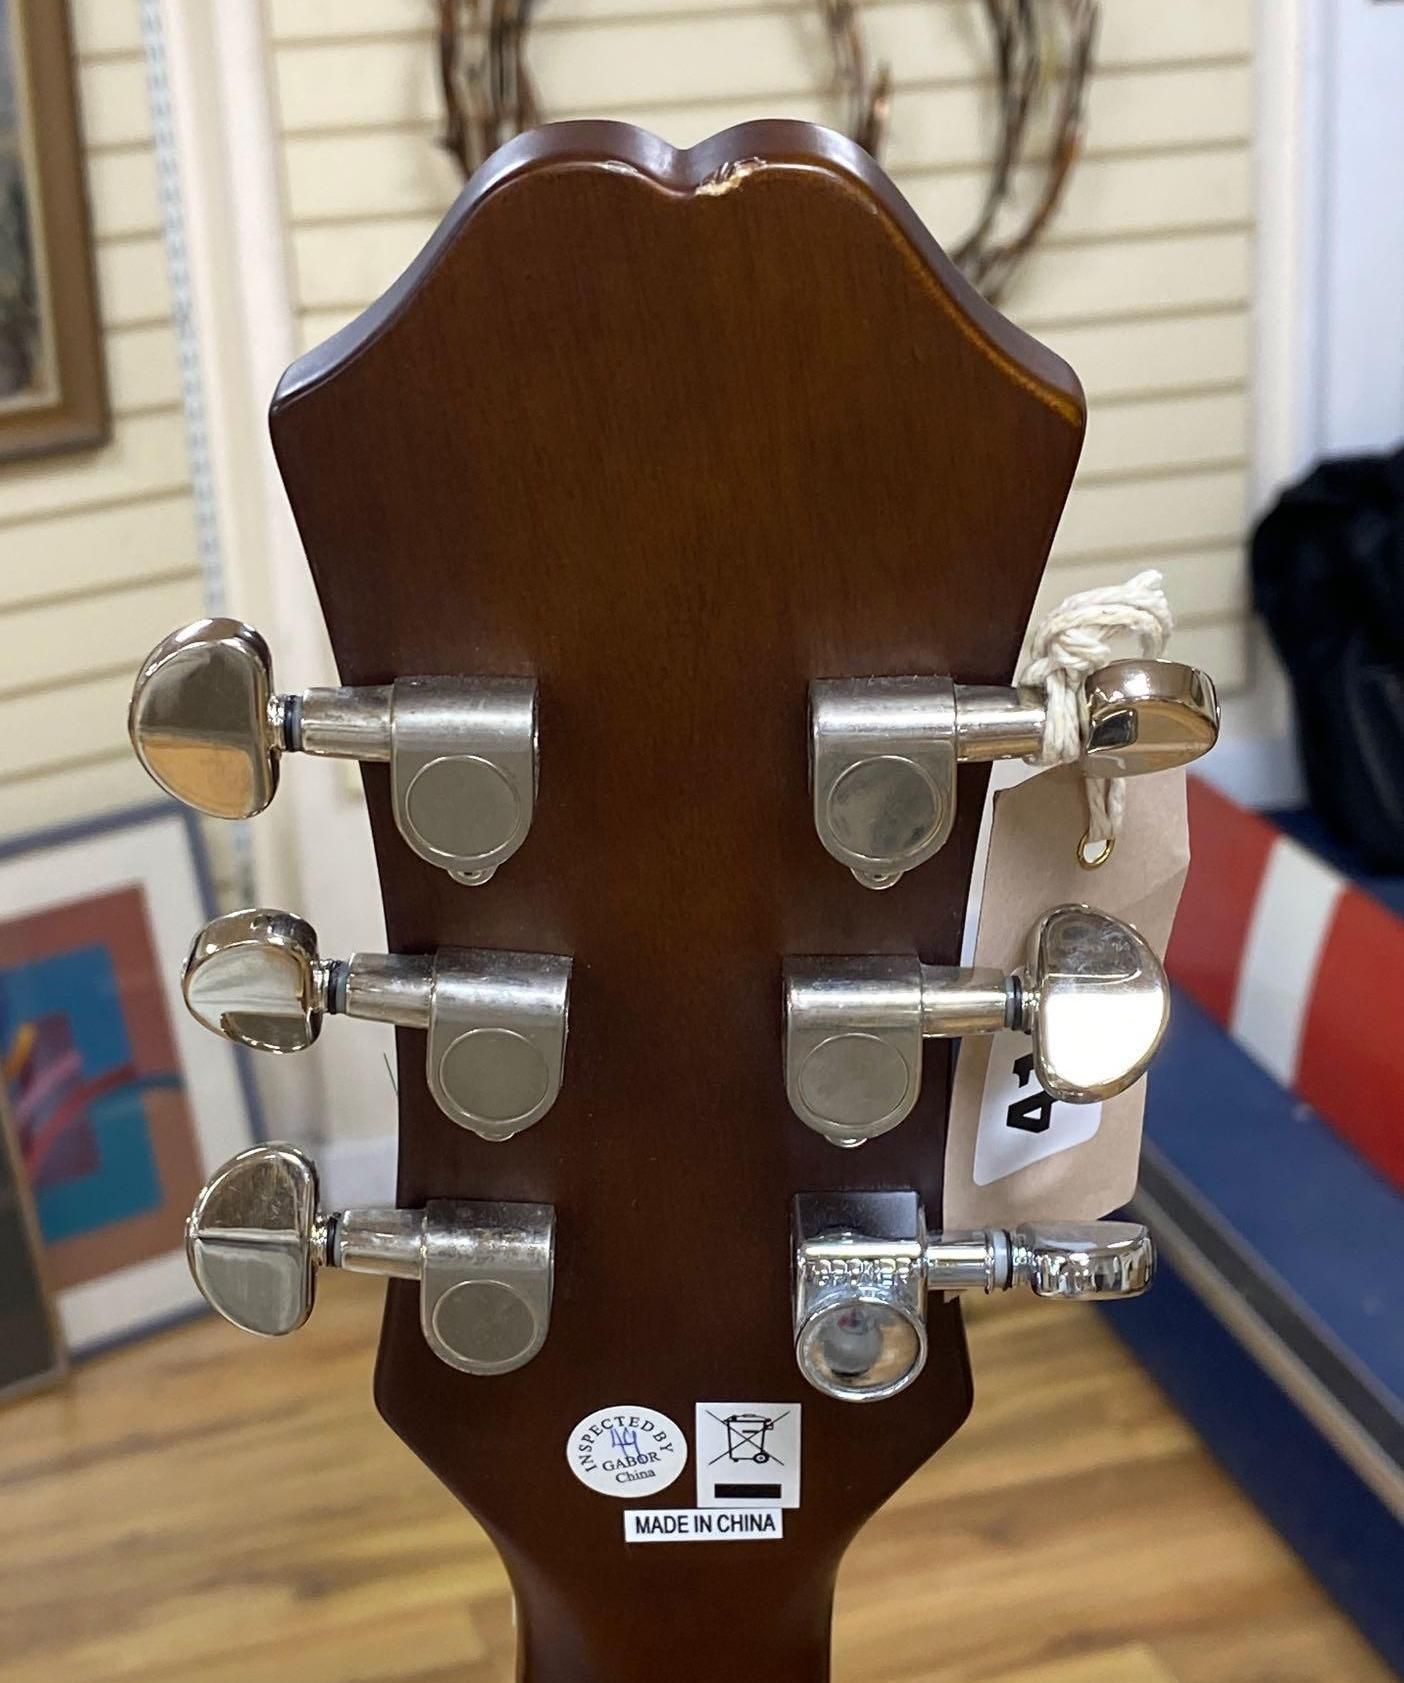 An Epiphone acoustic guitar, model DR-220SVS, in soft case